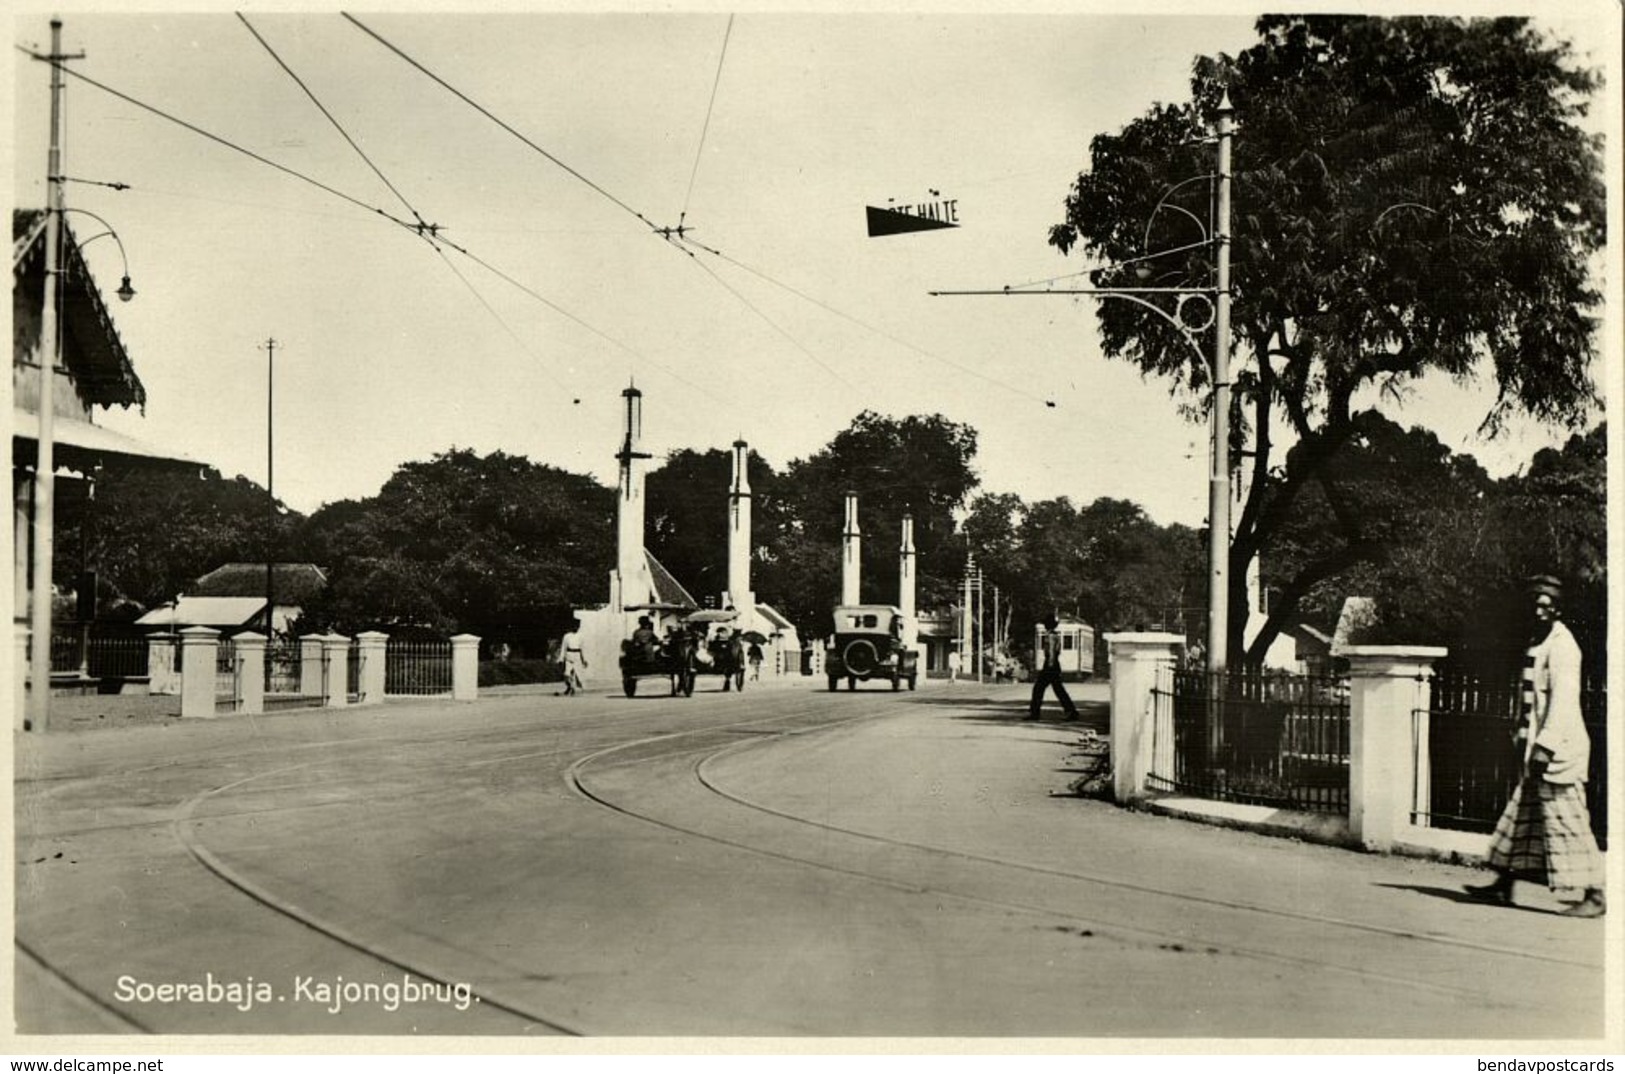 Indonesia, JAVA SOERABAIA, Kajong Bridge, Car (1920s) Postcard - Indonesië